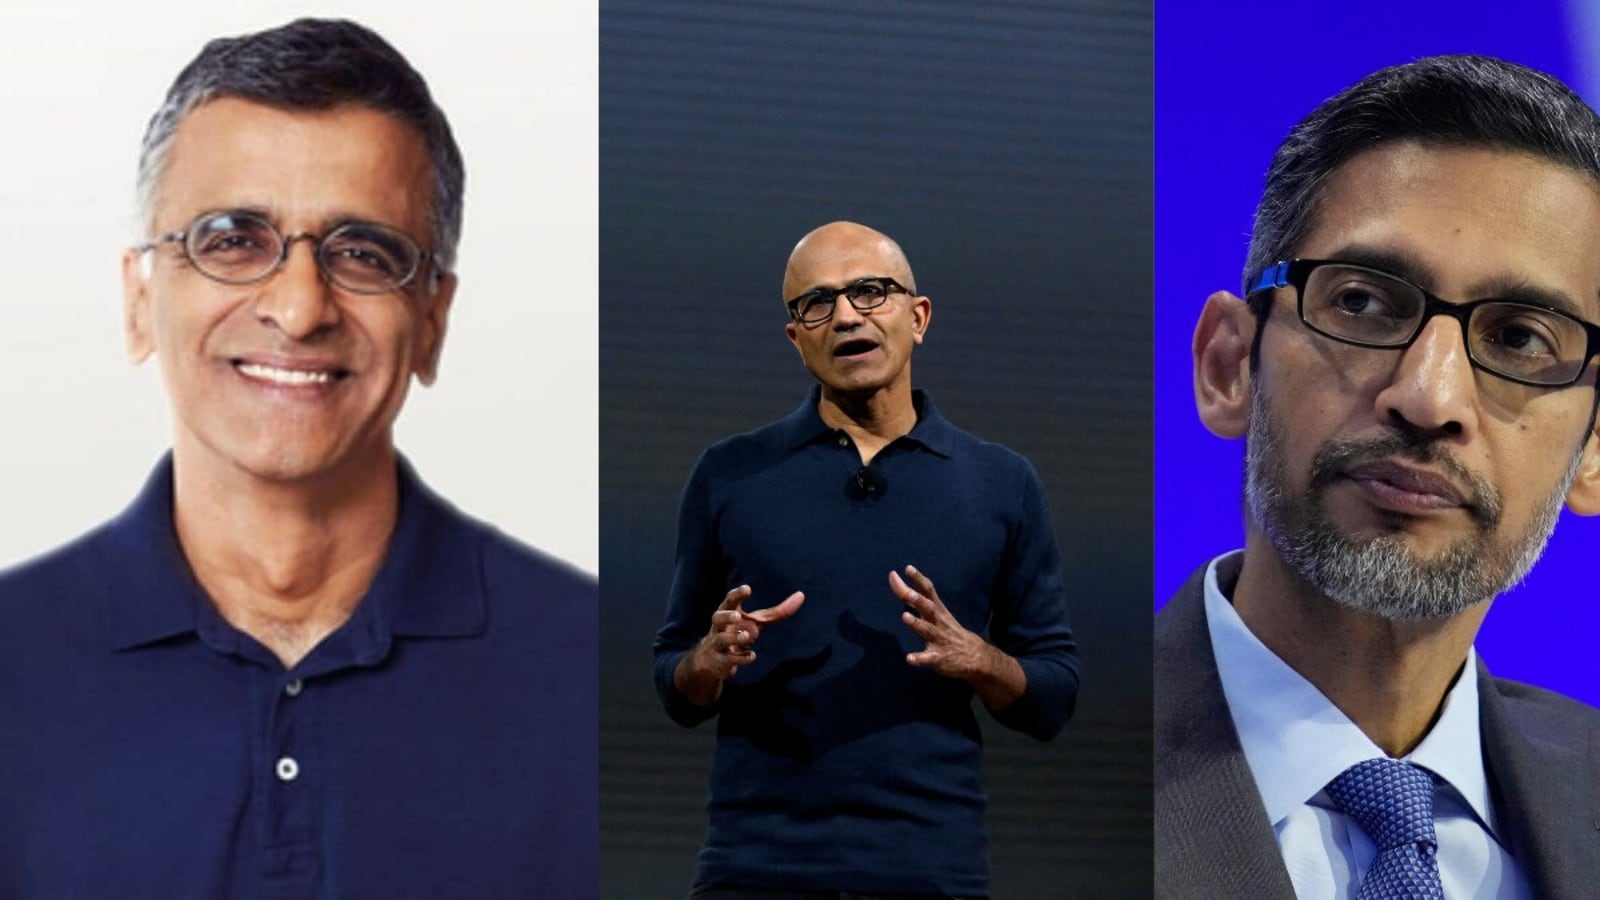 From S. Ramaswamy, Sundar Pichai to Satya Nadella, here are the top 10 Indian-origin CEOs leading global companies